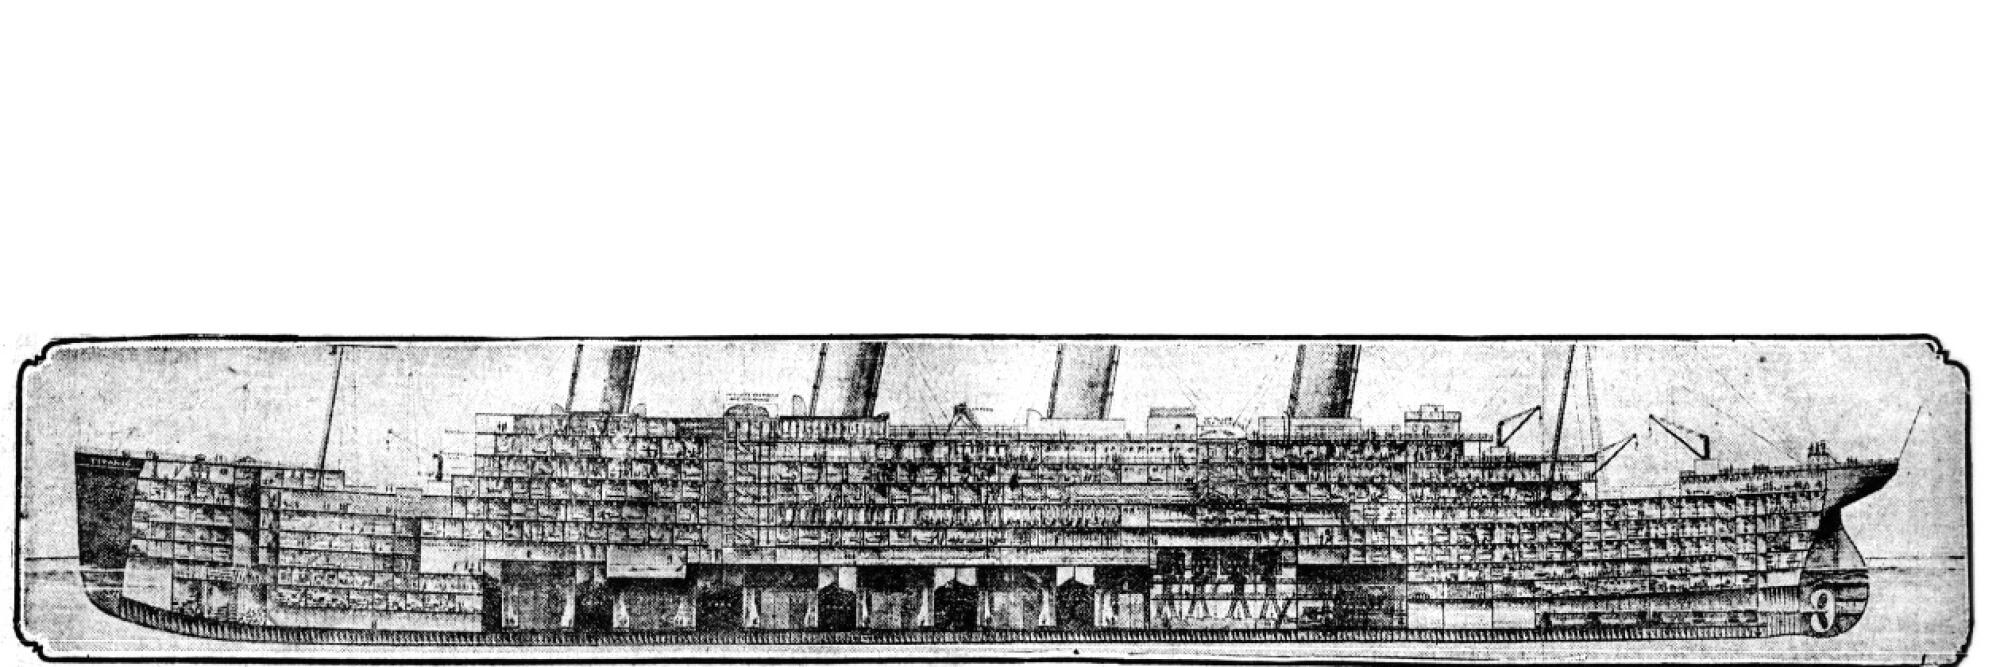 Old illustration of Titanic